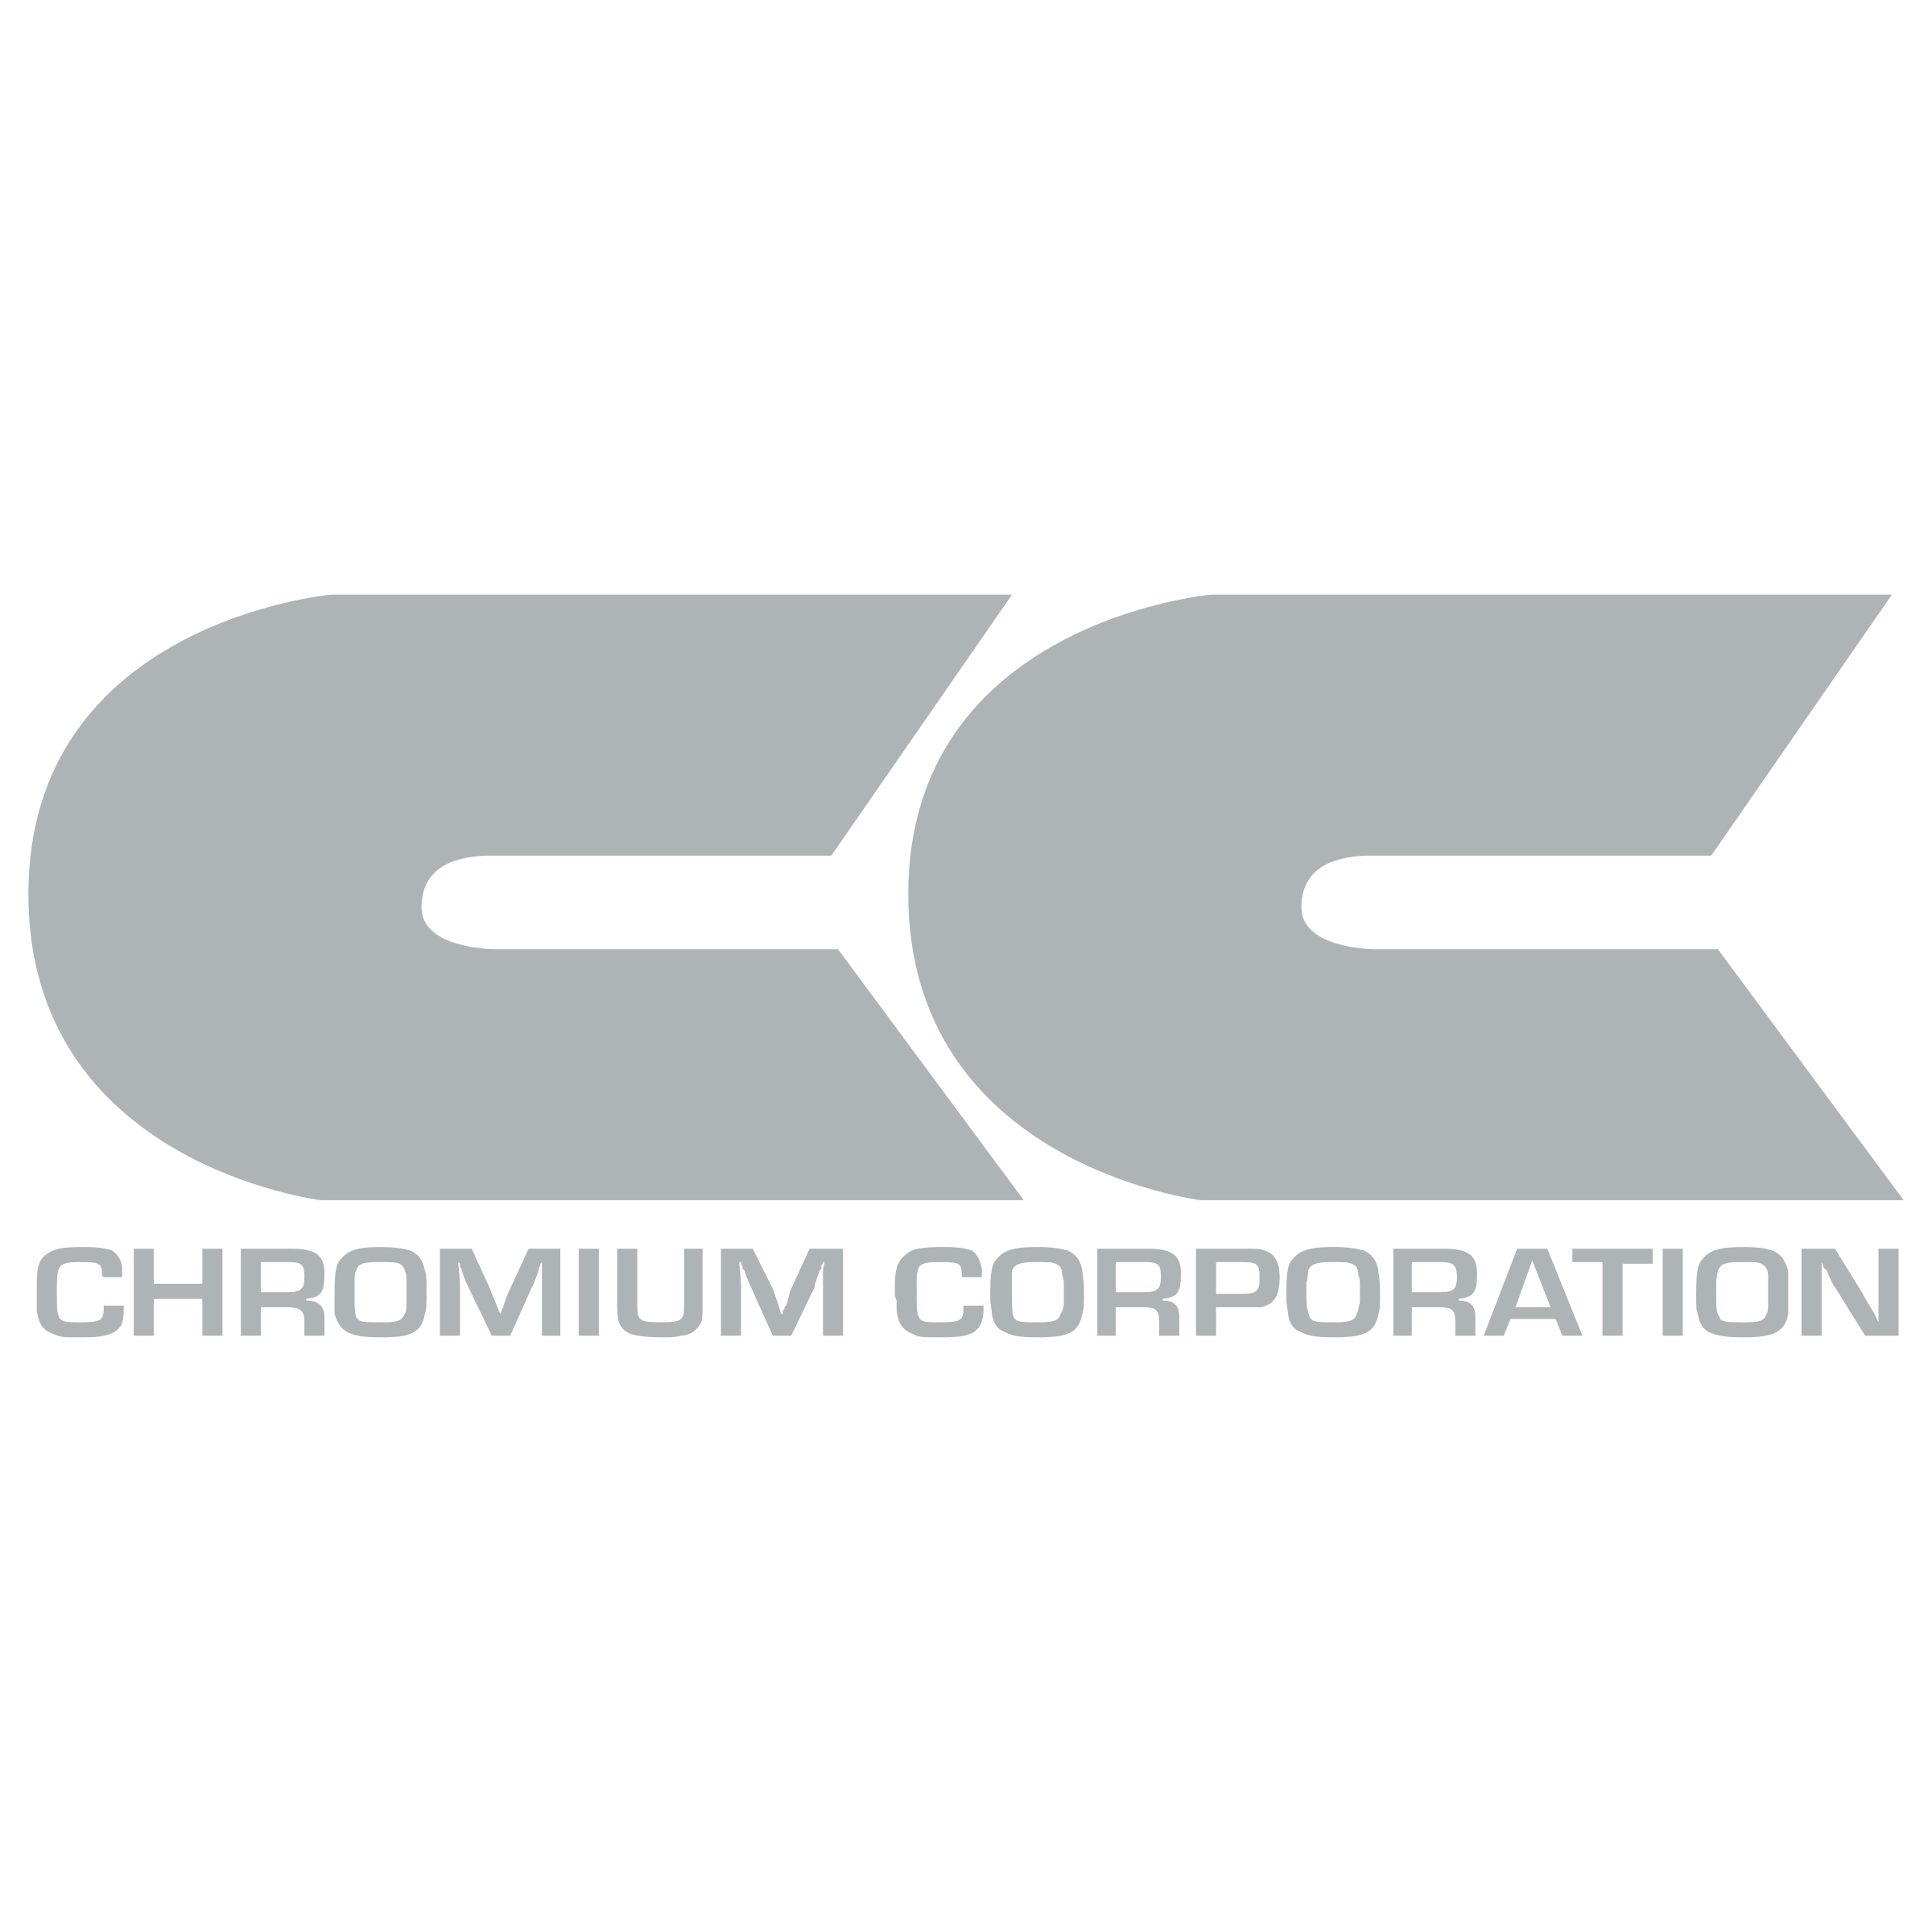 Google Chromium Logo - Chromium Logo PNG Transparent & SVG Vector - Freebie Supply